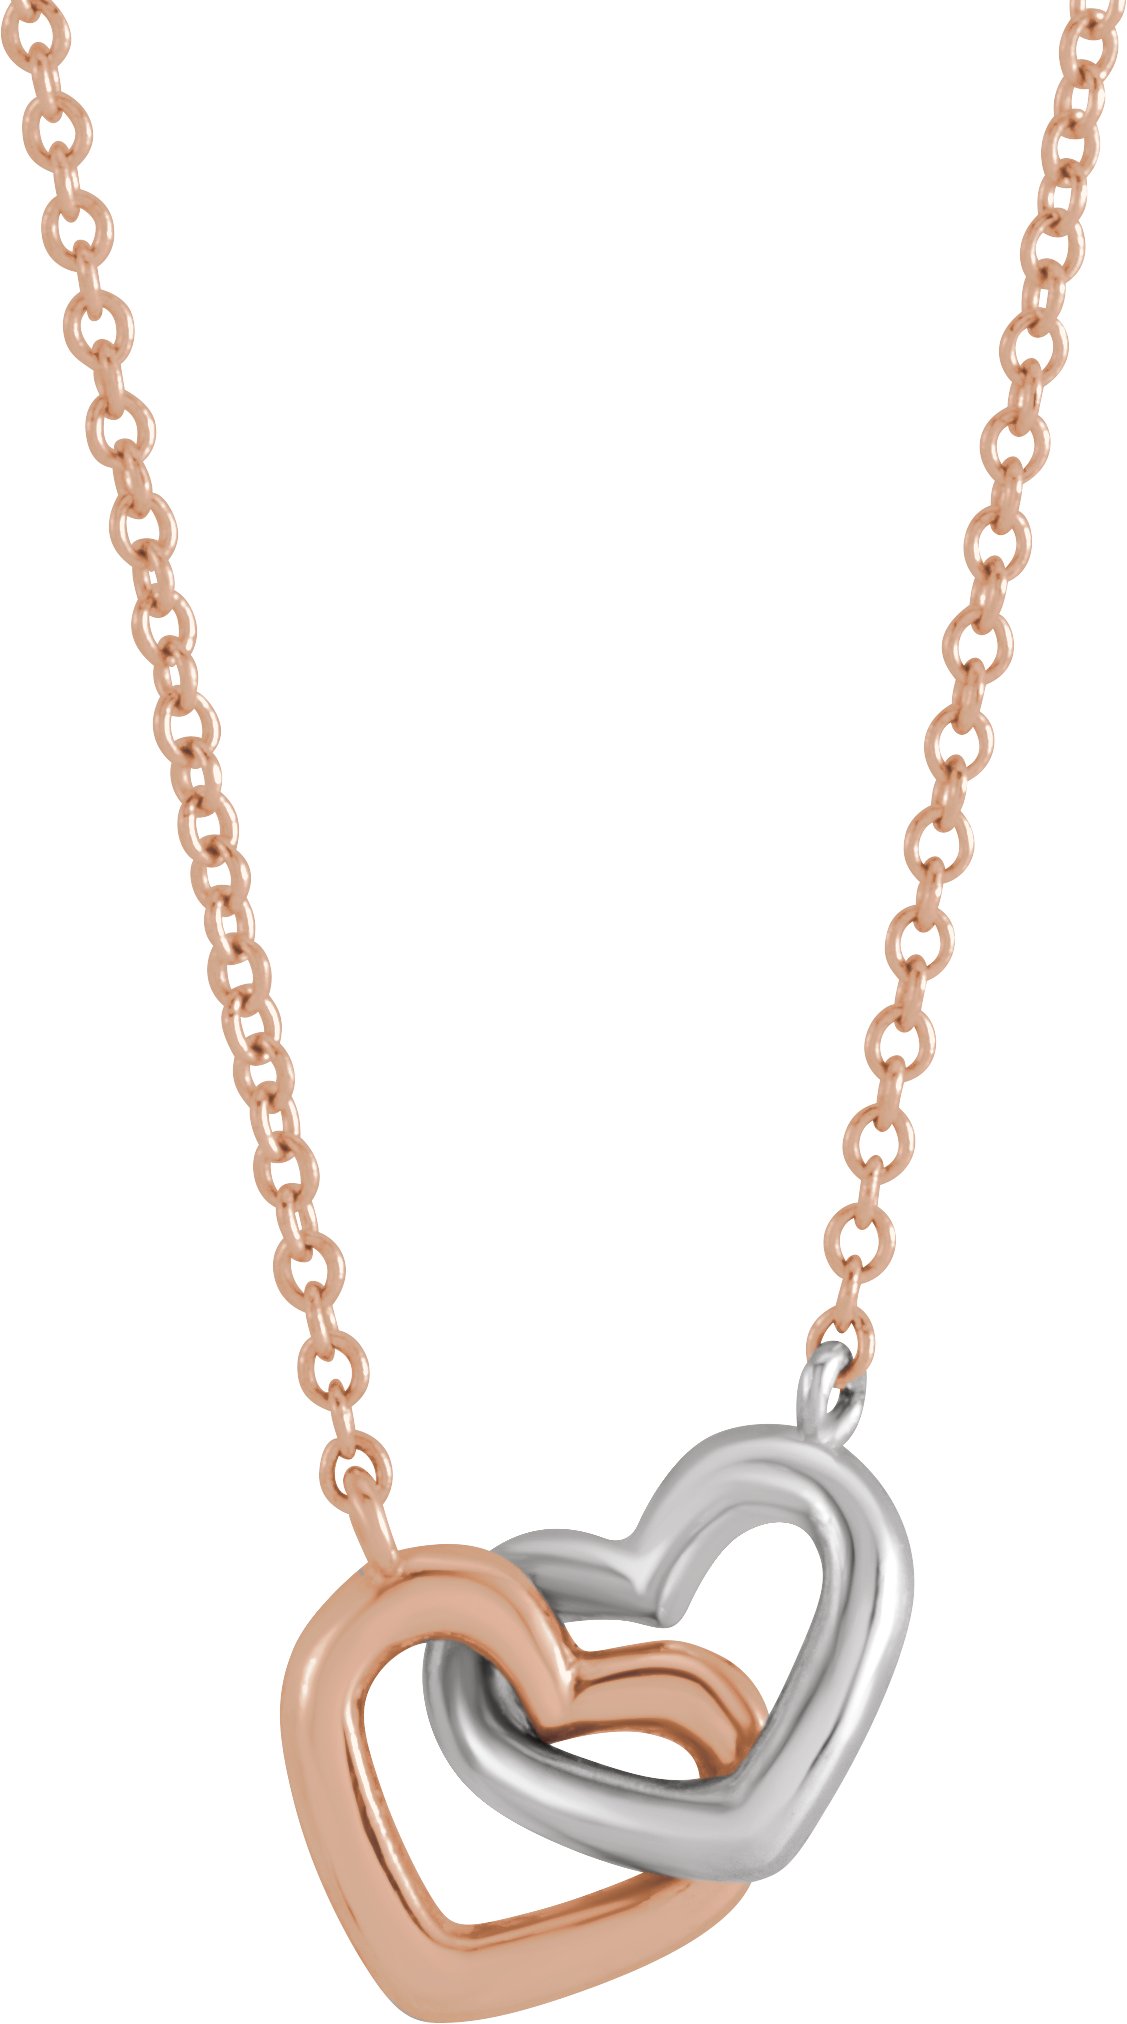 14K Rose and White Interlocking Heart 16 inch Necklace Ref 17542650